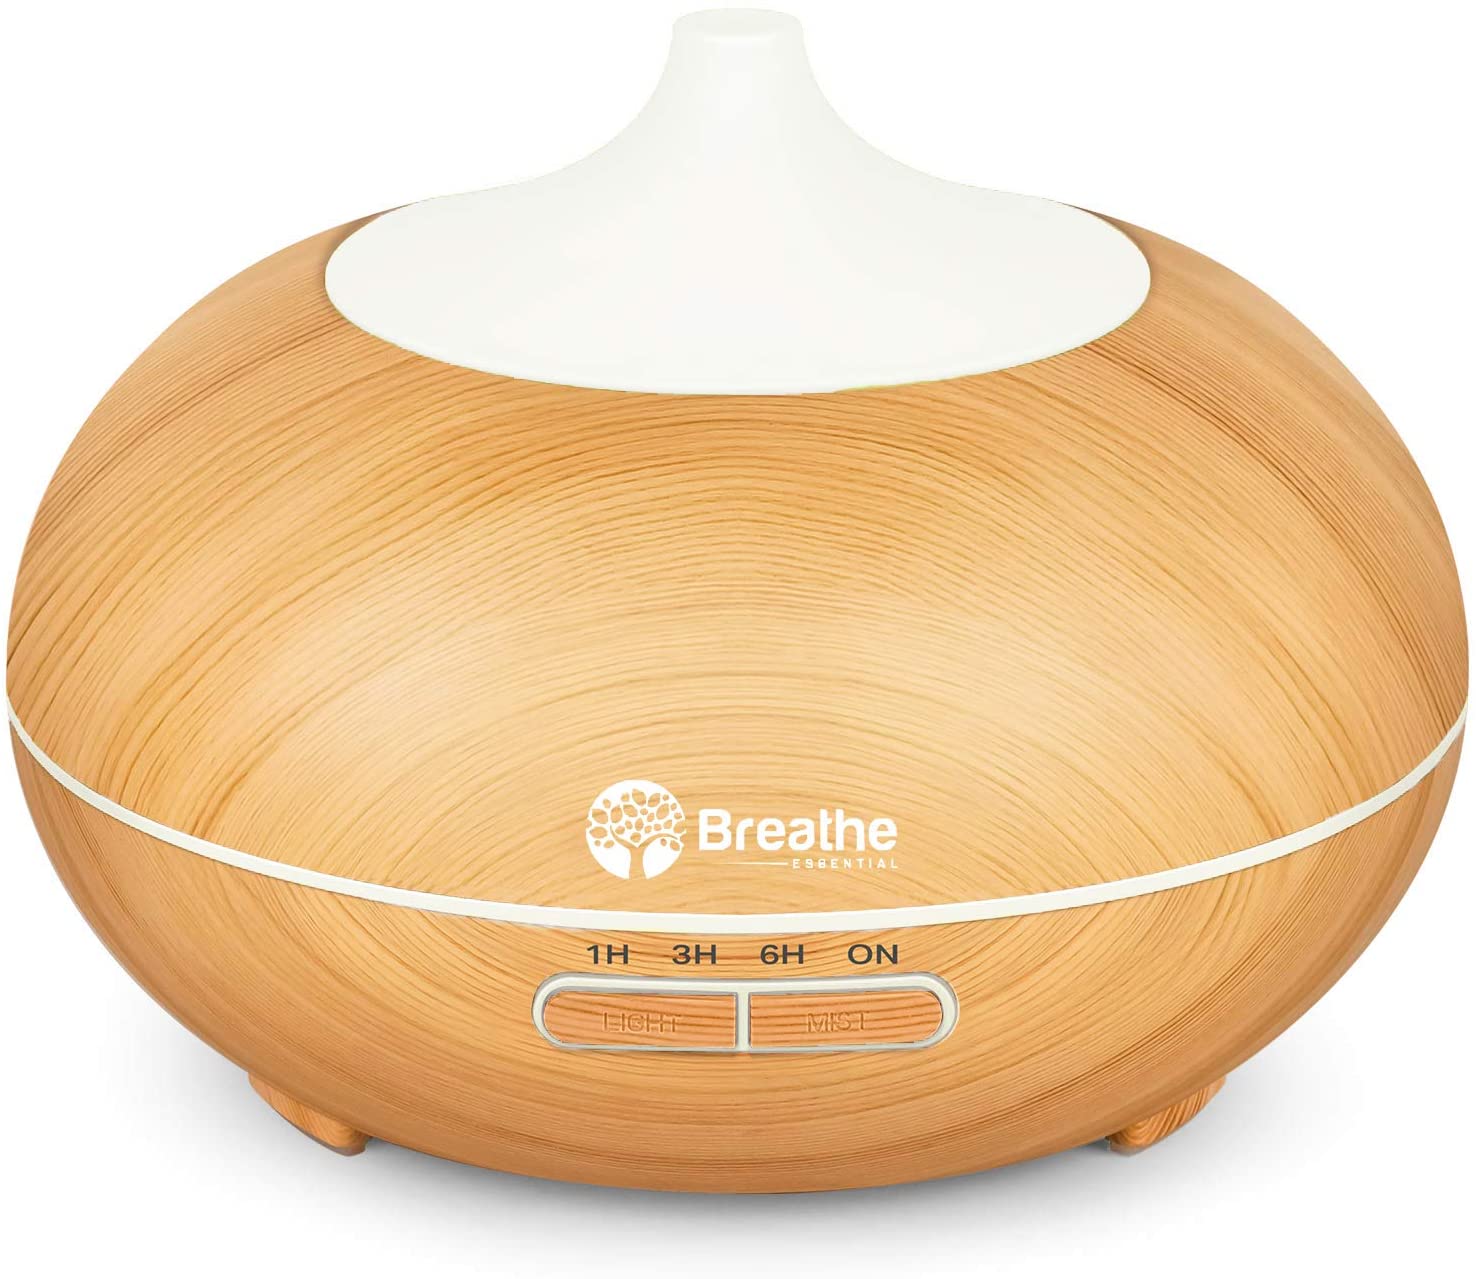 breathe essential oil diffuser